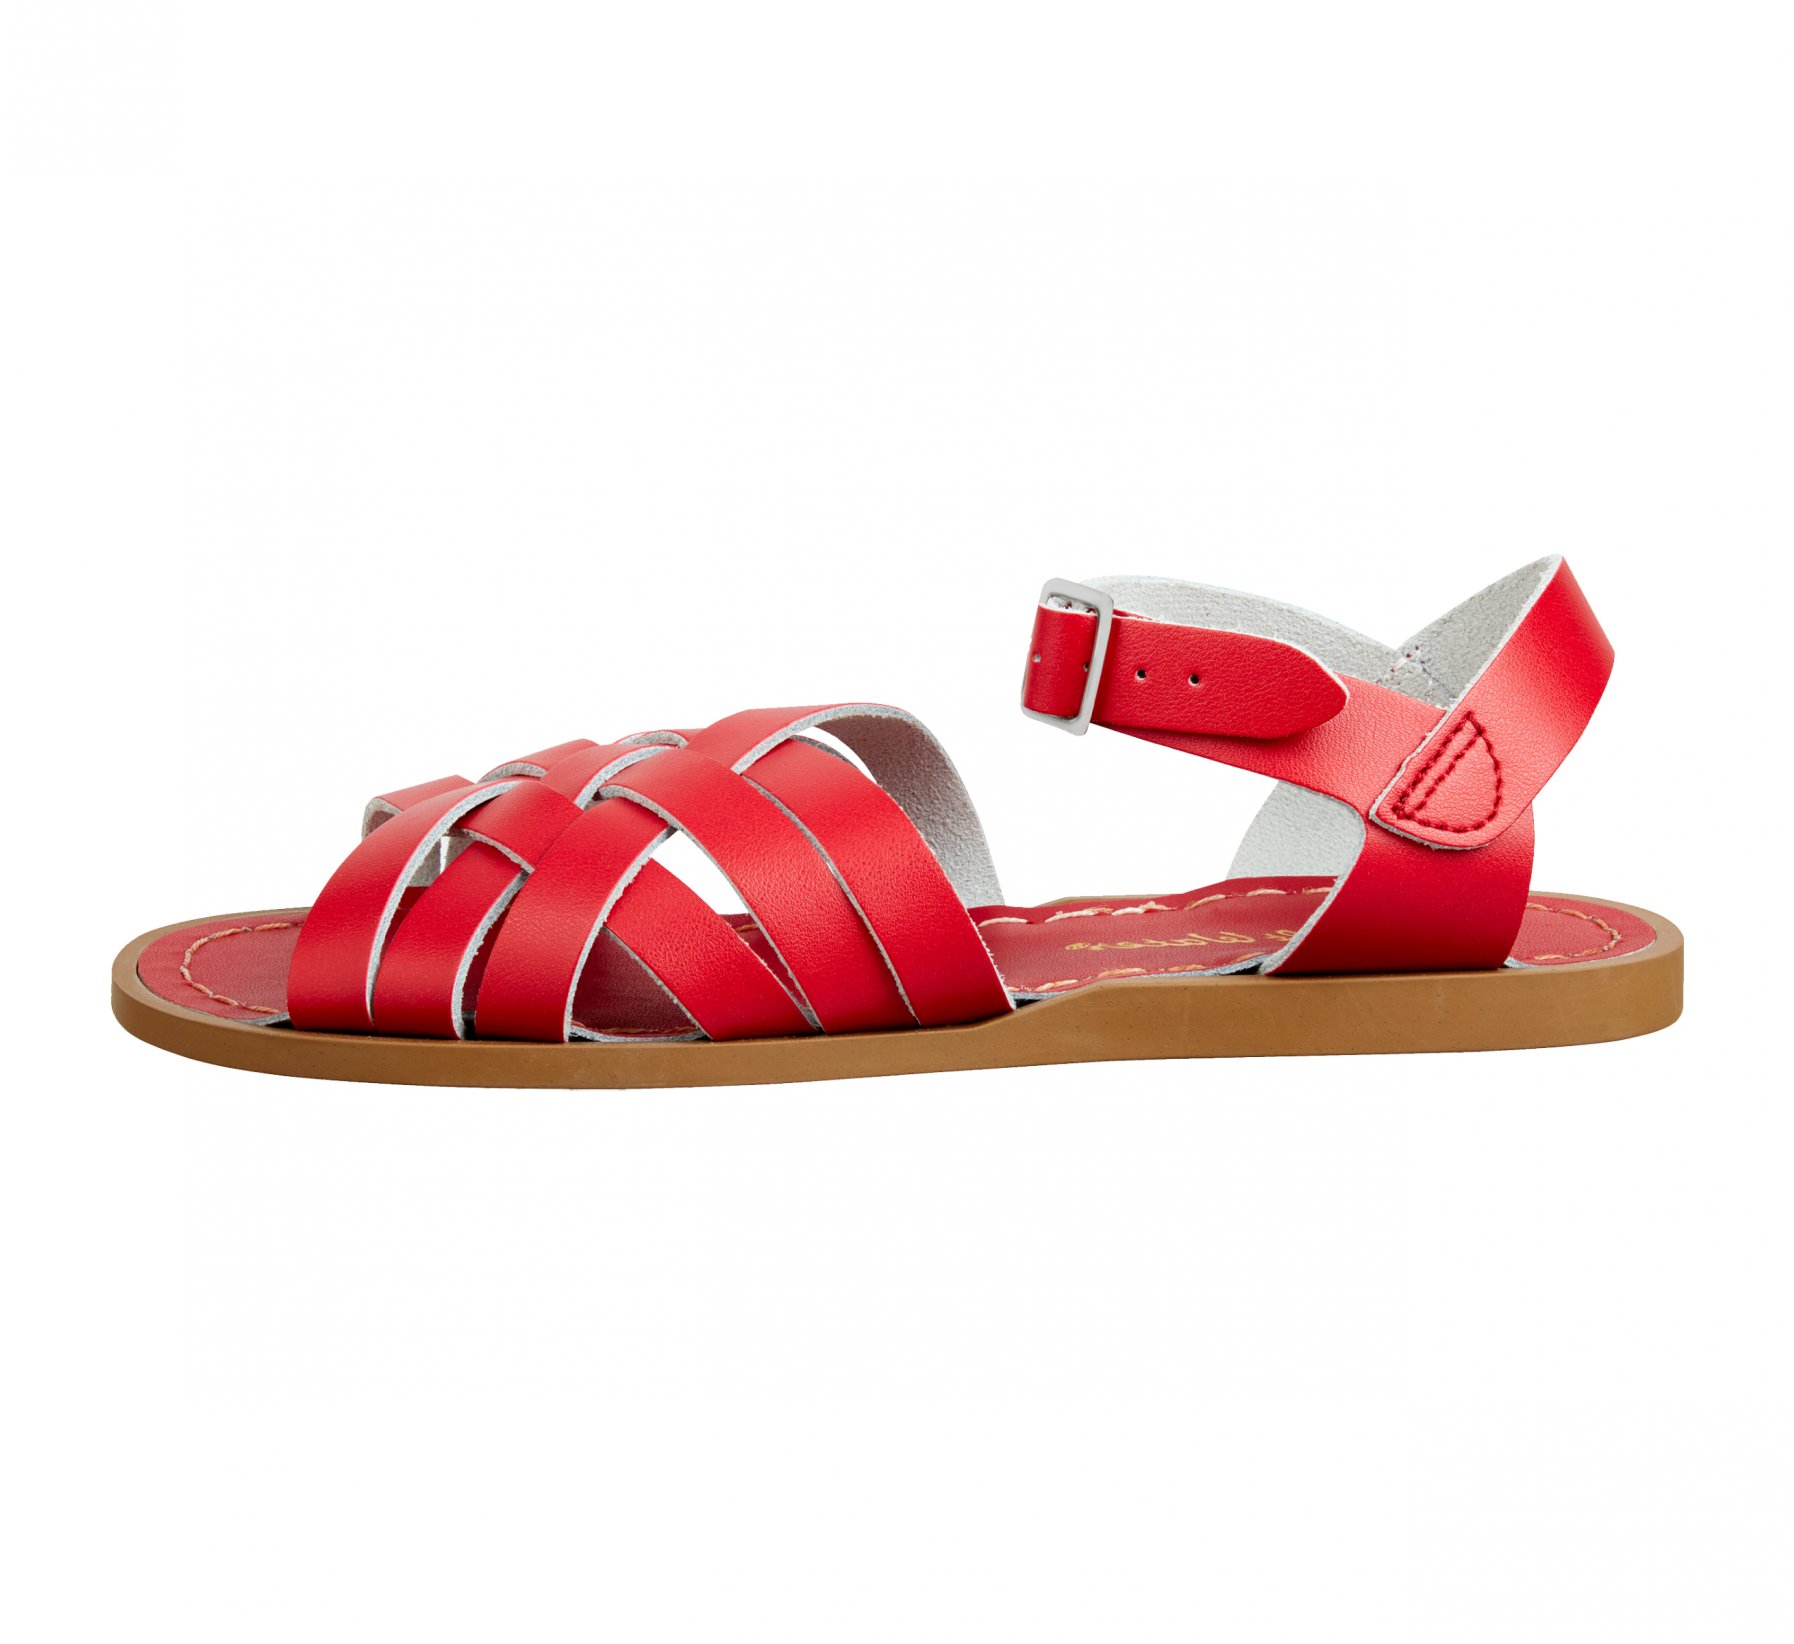 Retro Red Sandal - Salt Water Sandals